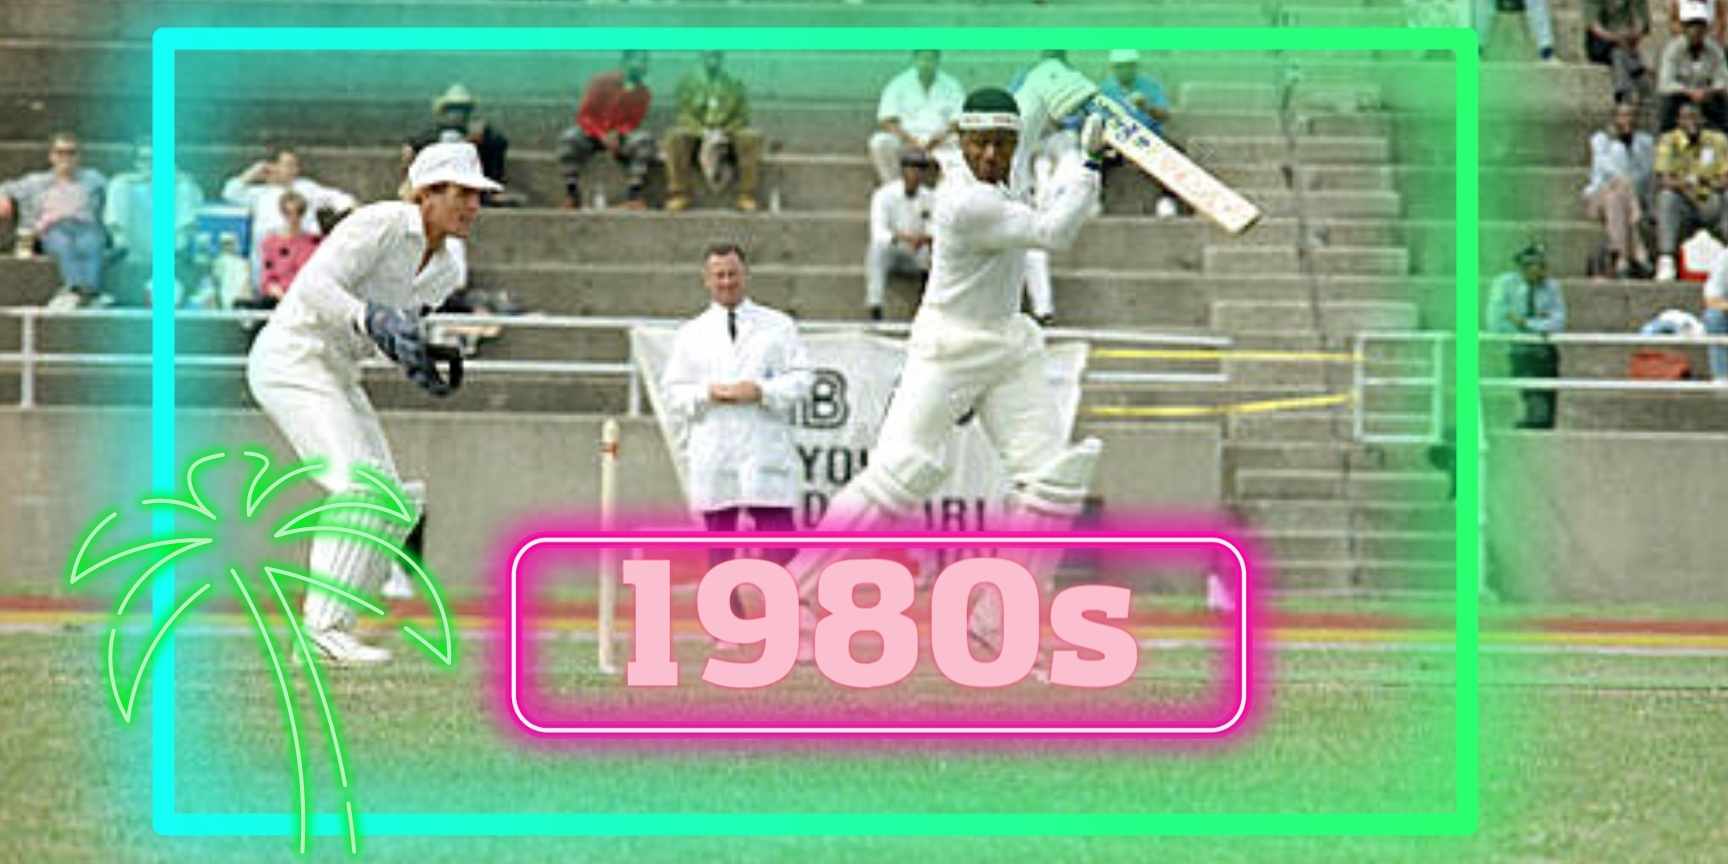 1980s in cricket history